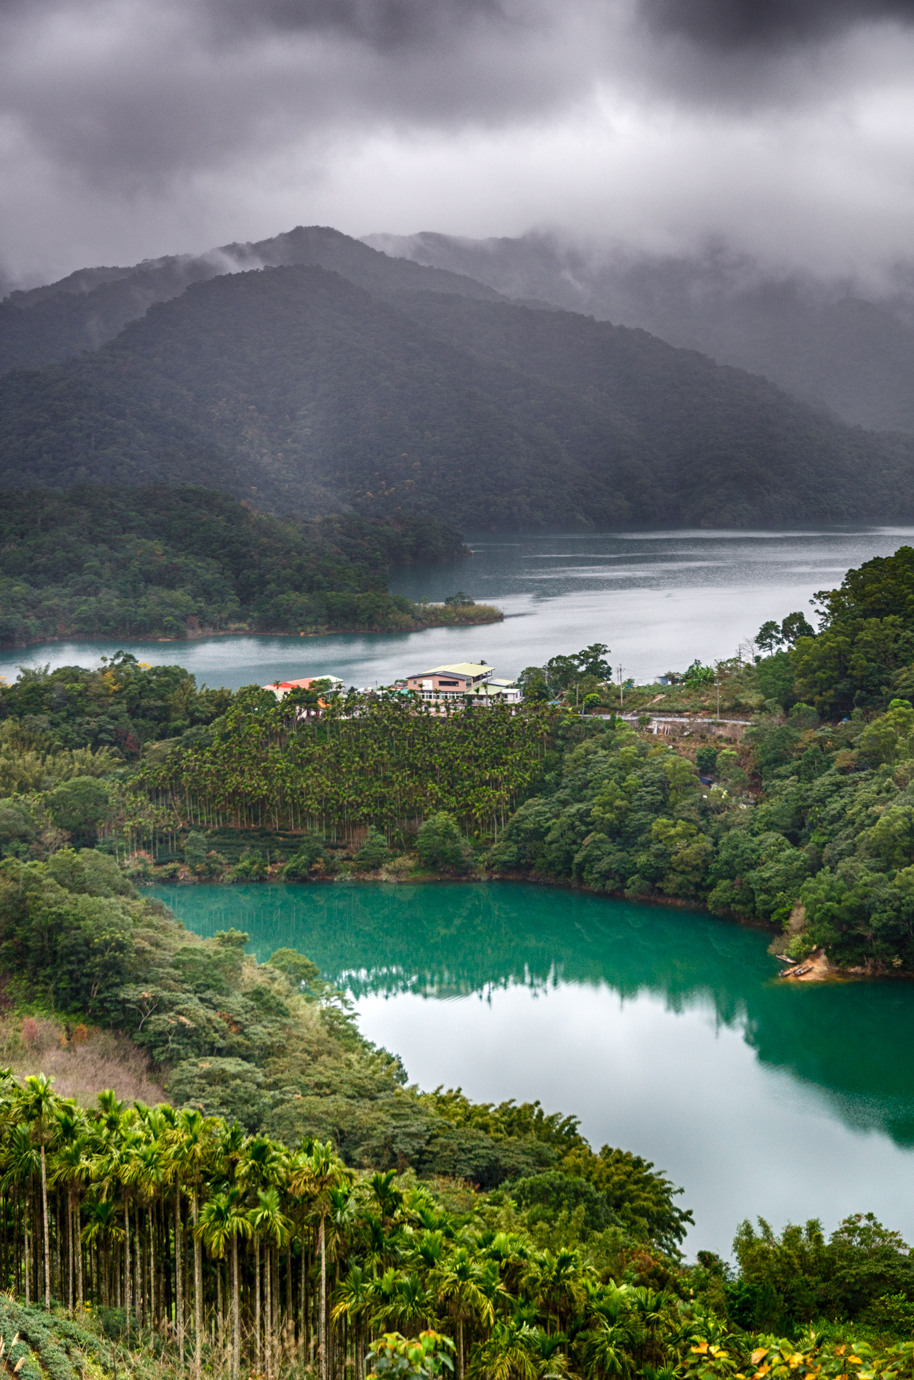 The emerald lakes of Shiding amidst the Tea Plantations